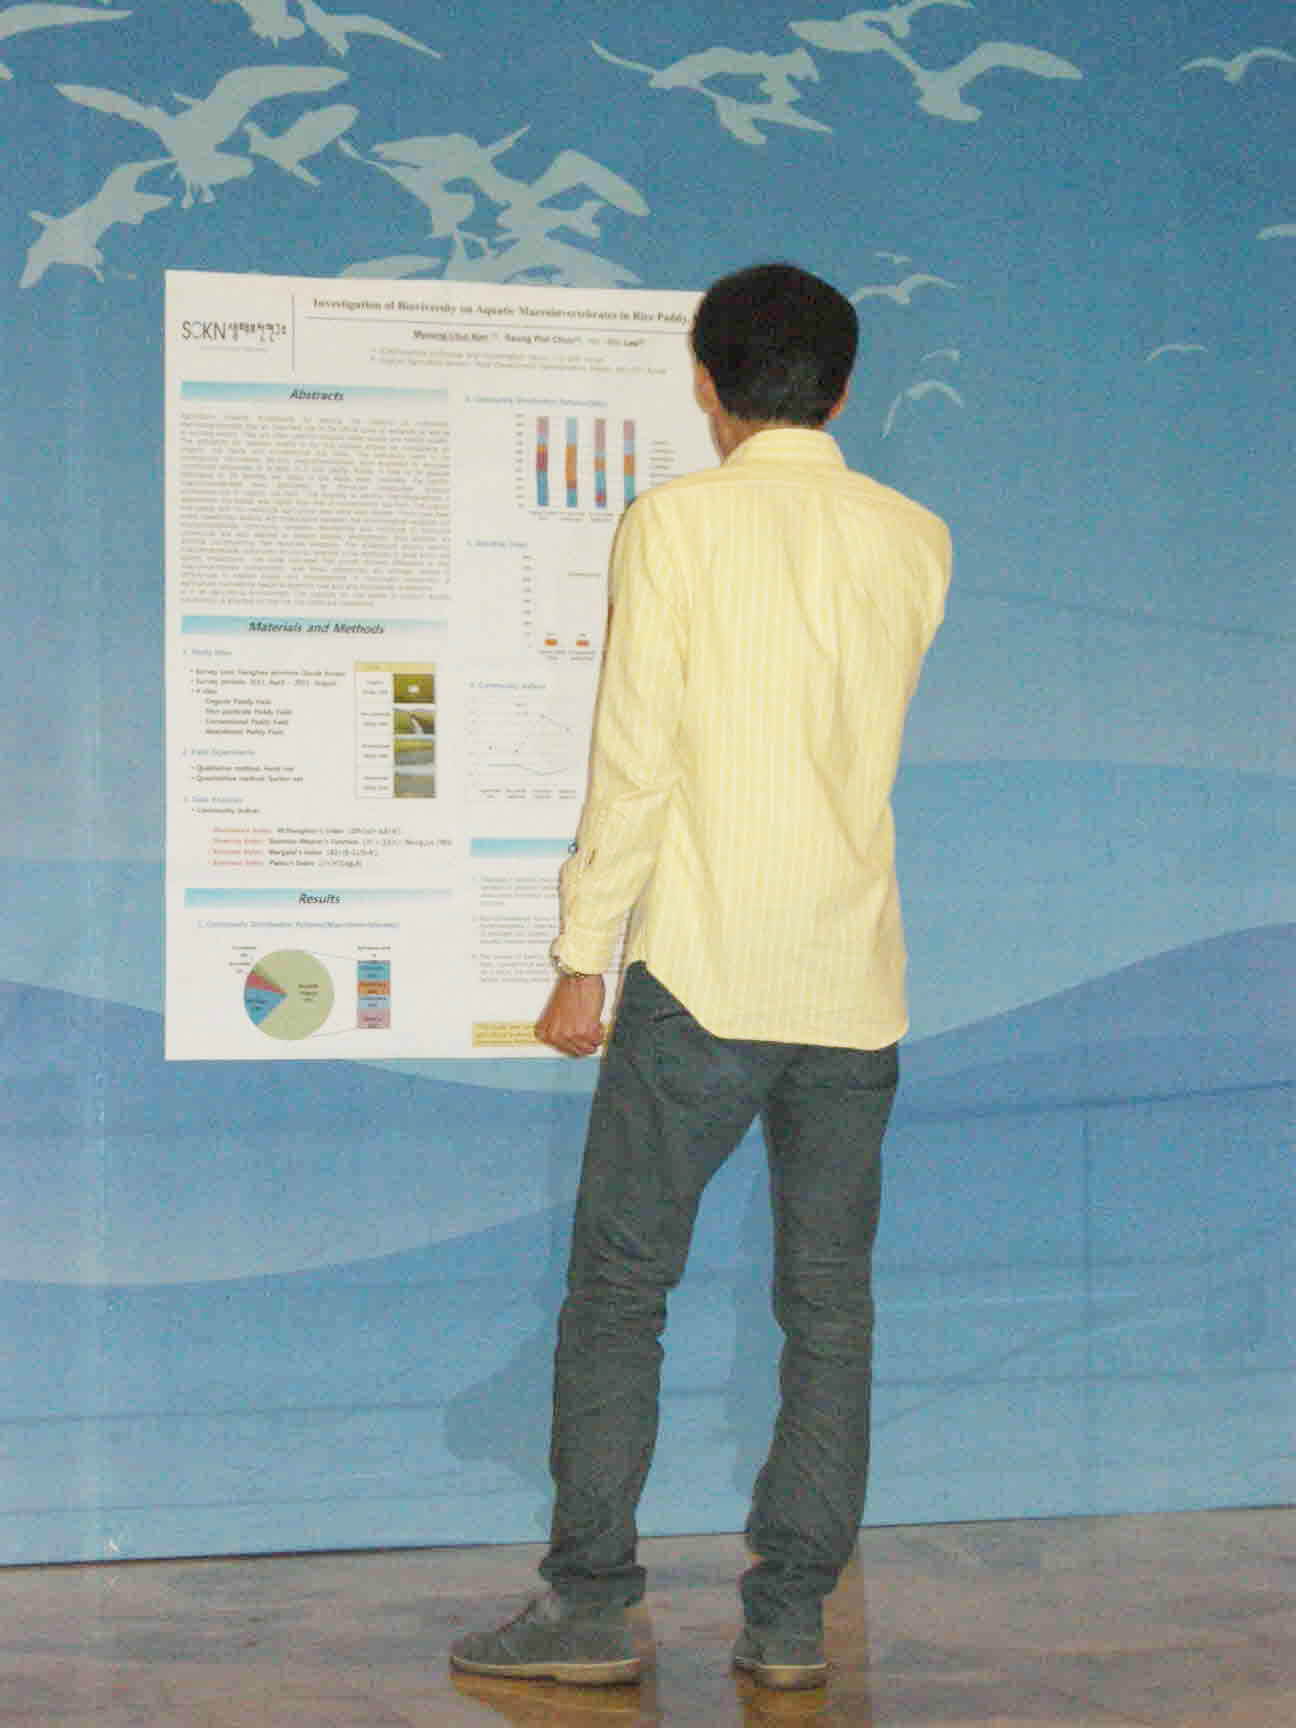 2011 Asian Wetland Symposium(AWS) in Wuxi, China 10..jpg